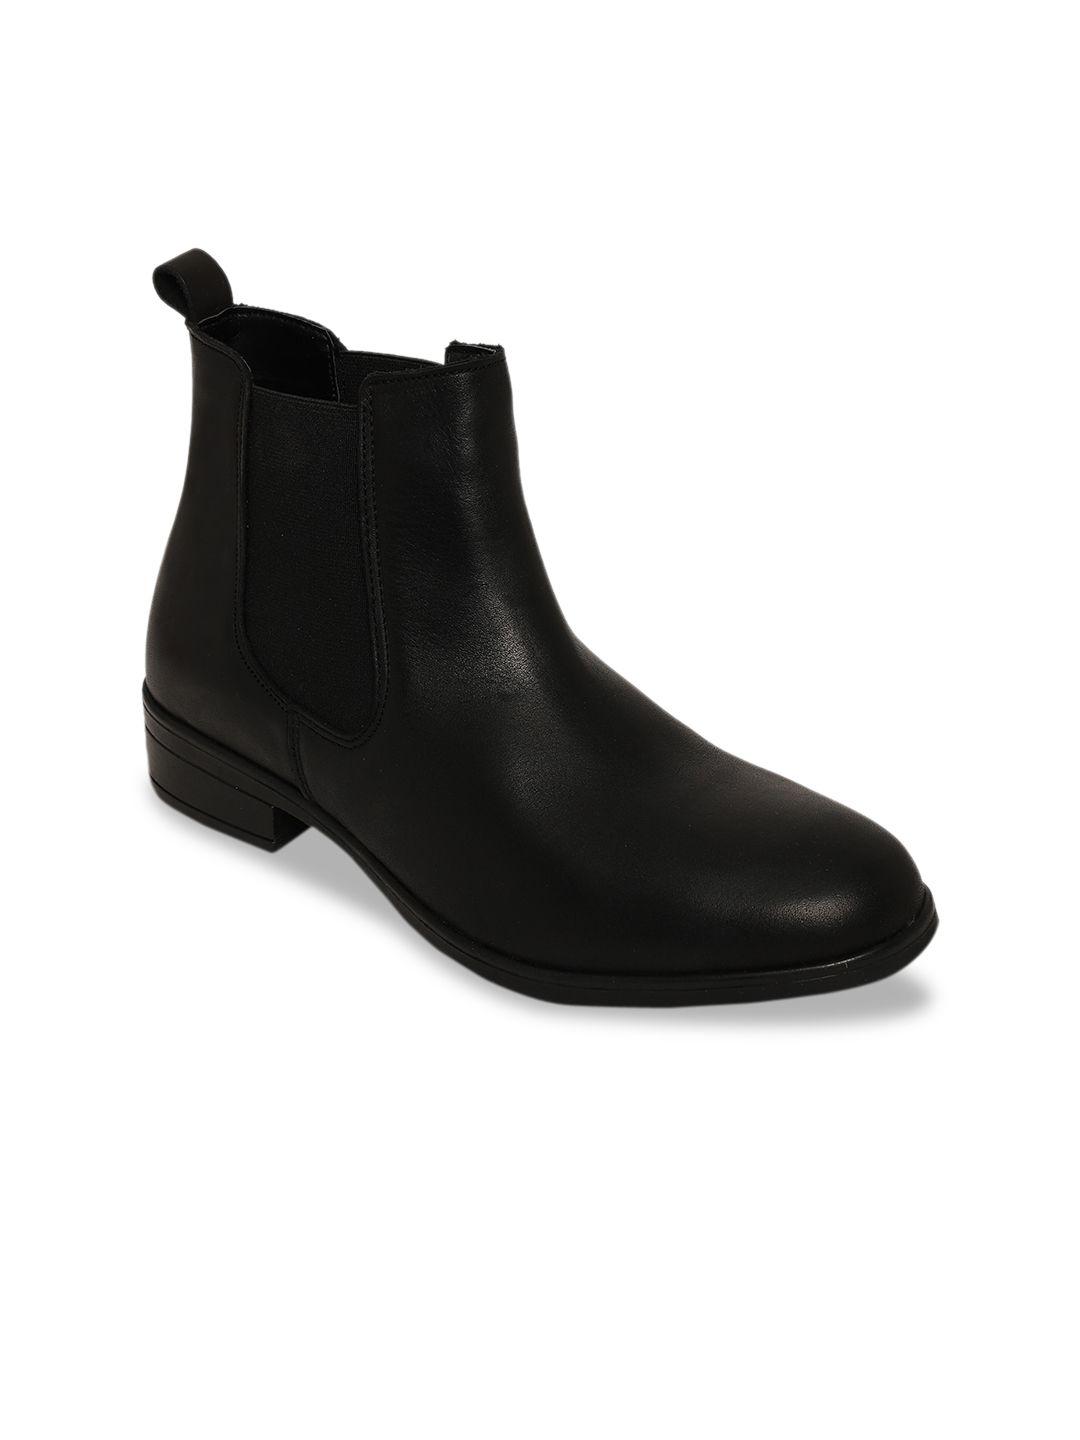 aldo-women-black-leather-flat-chelsea-boots